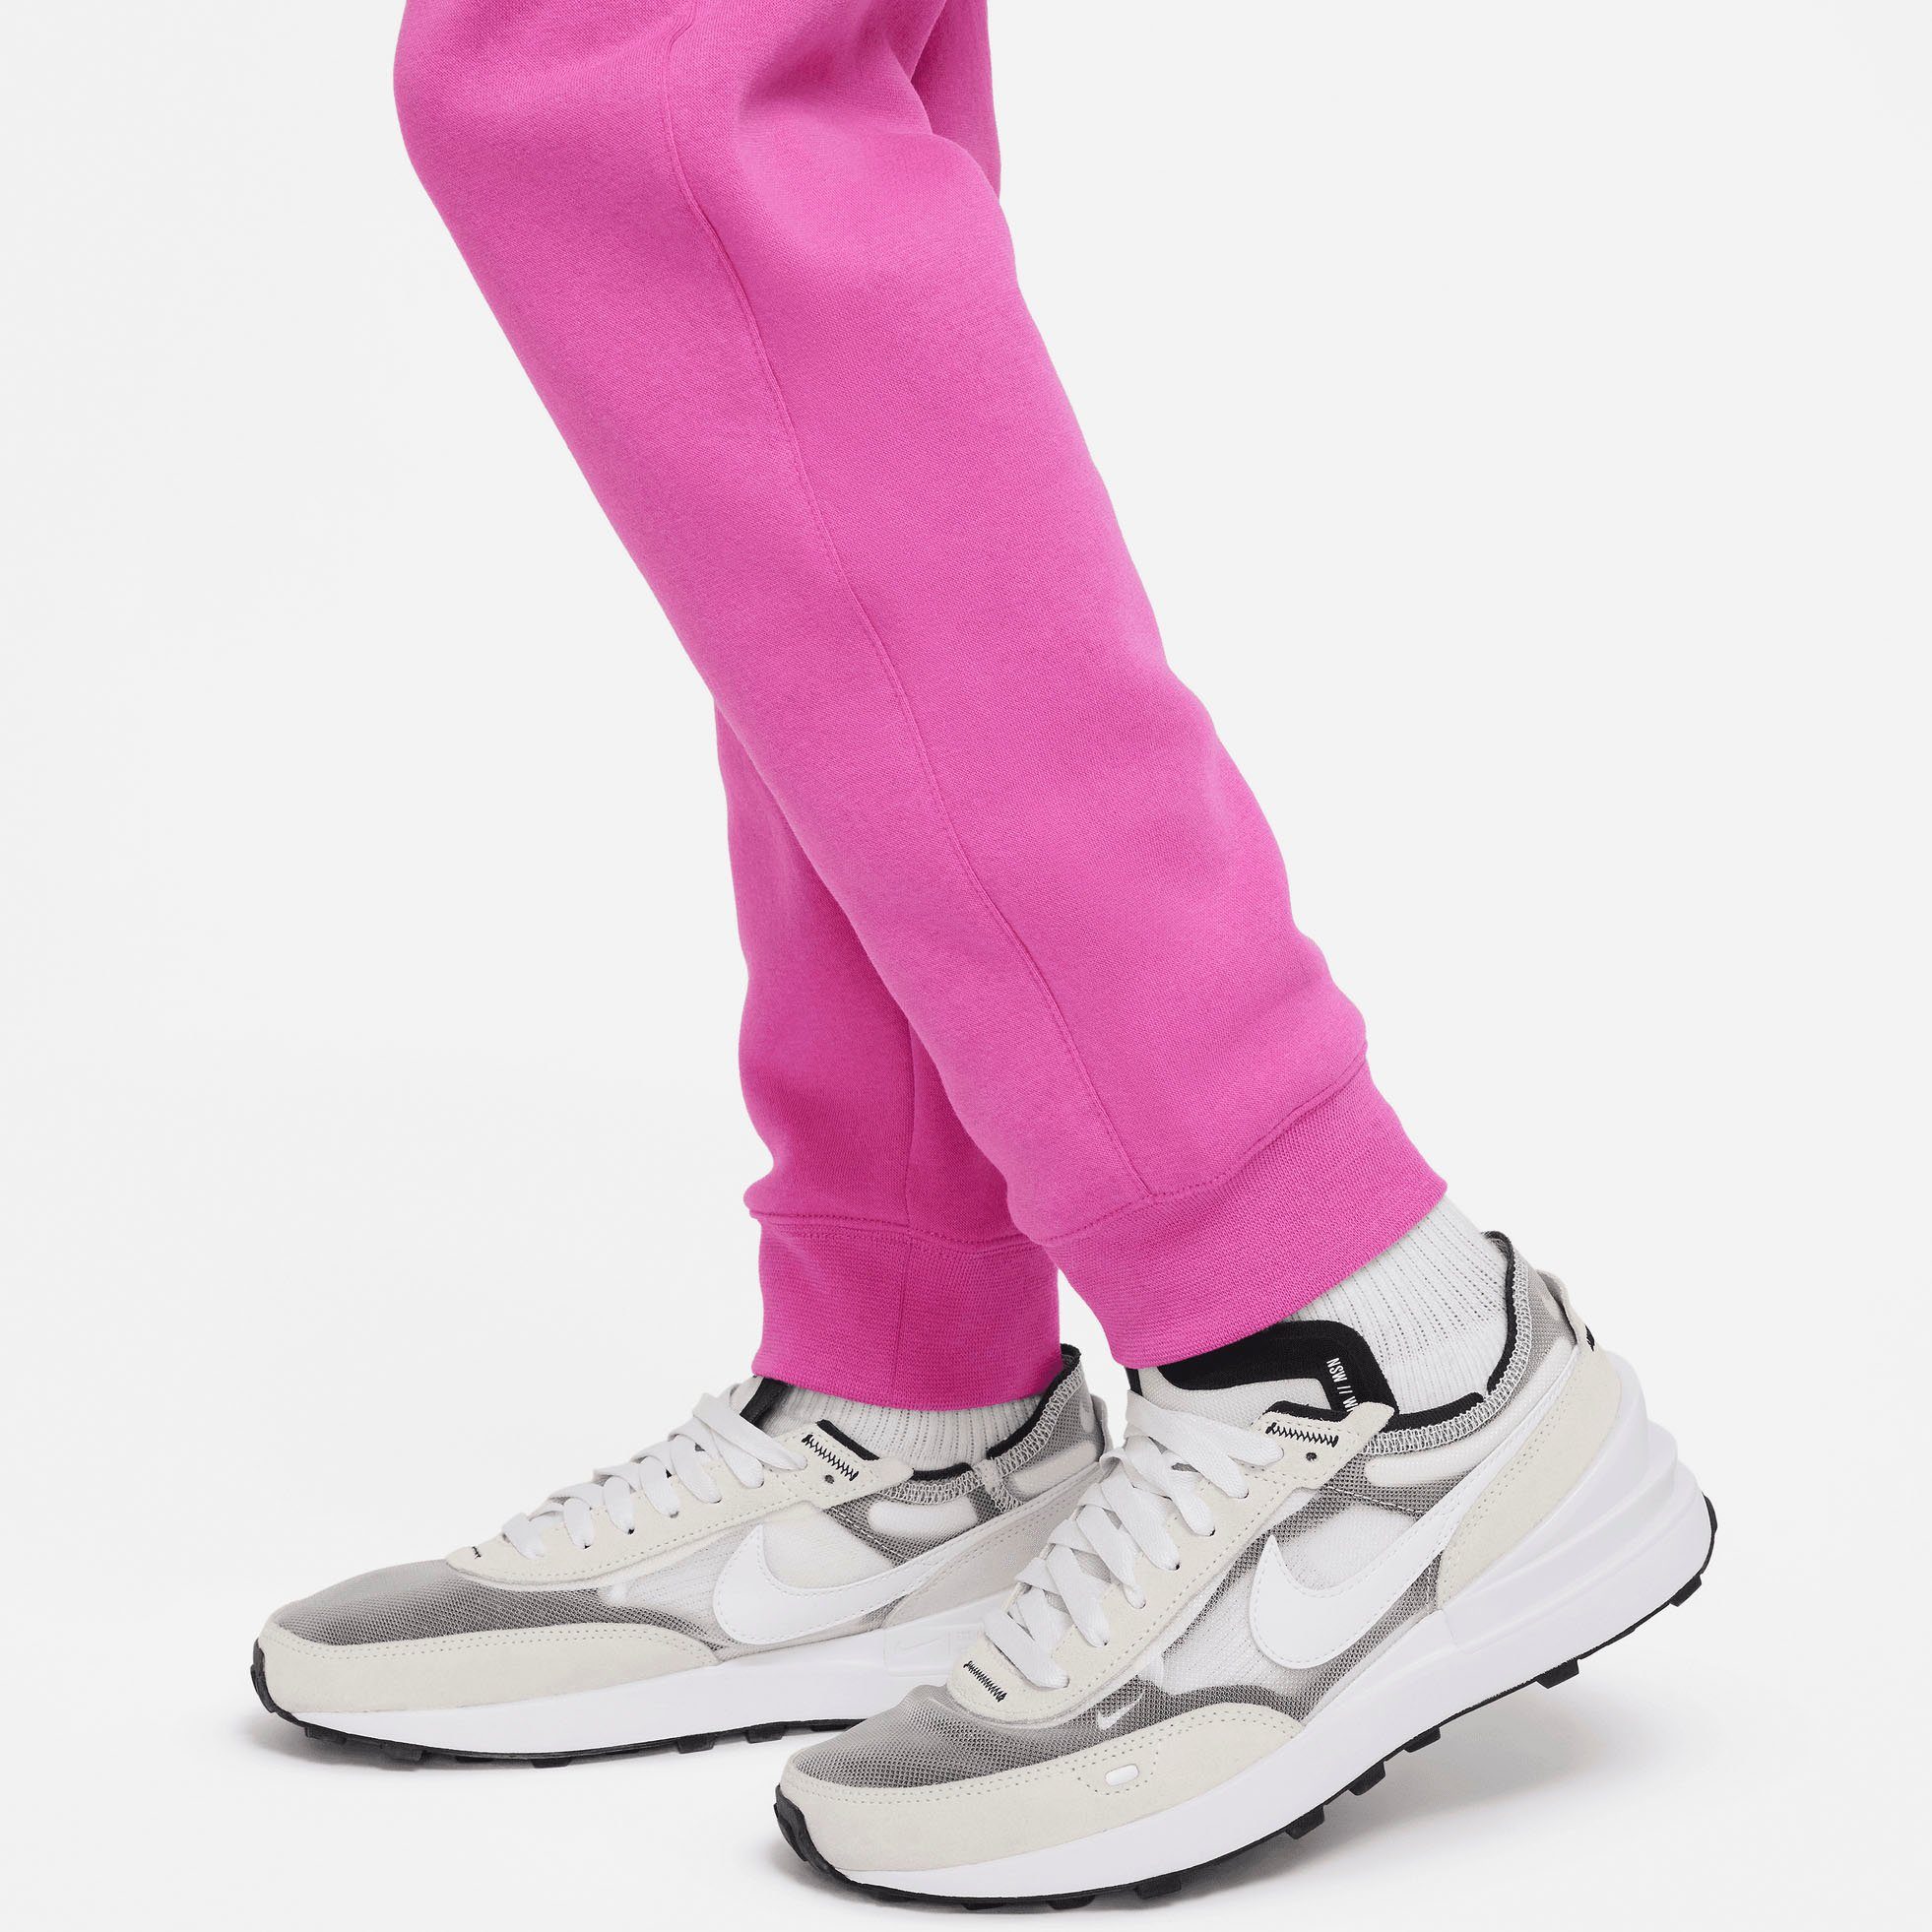 CORE FUCHSIA/ACTIVE 2-tlg), FUCHSIA/WHITE Jogginganzug (Set, für Nike ACTIVE Sportswear Kinder NSW